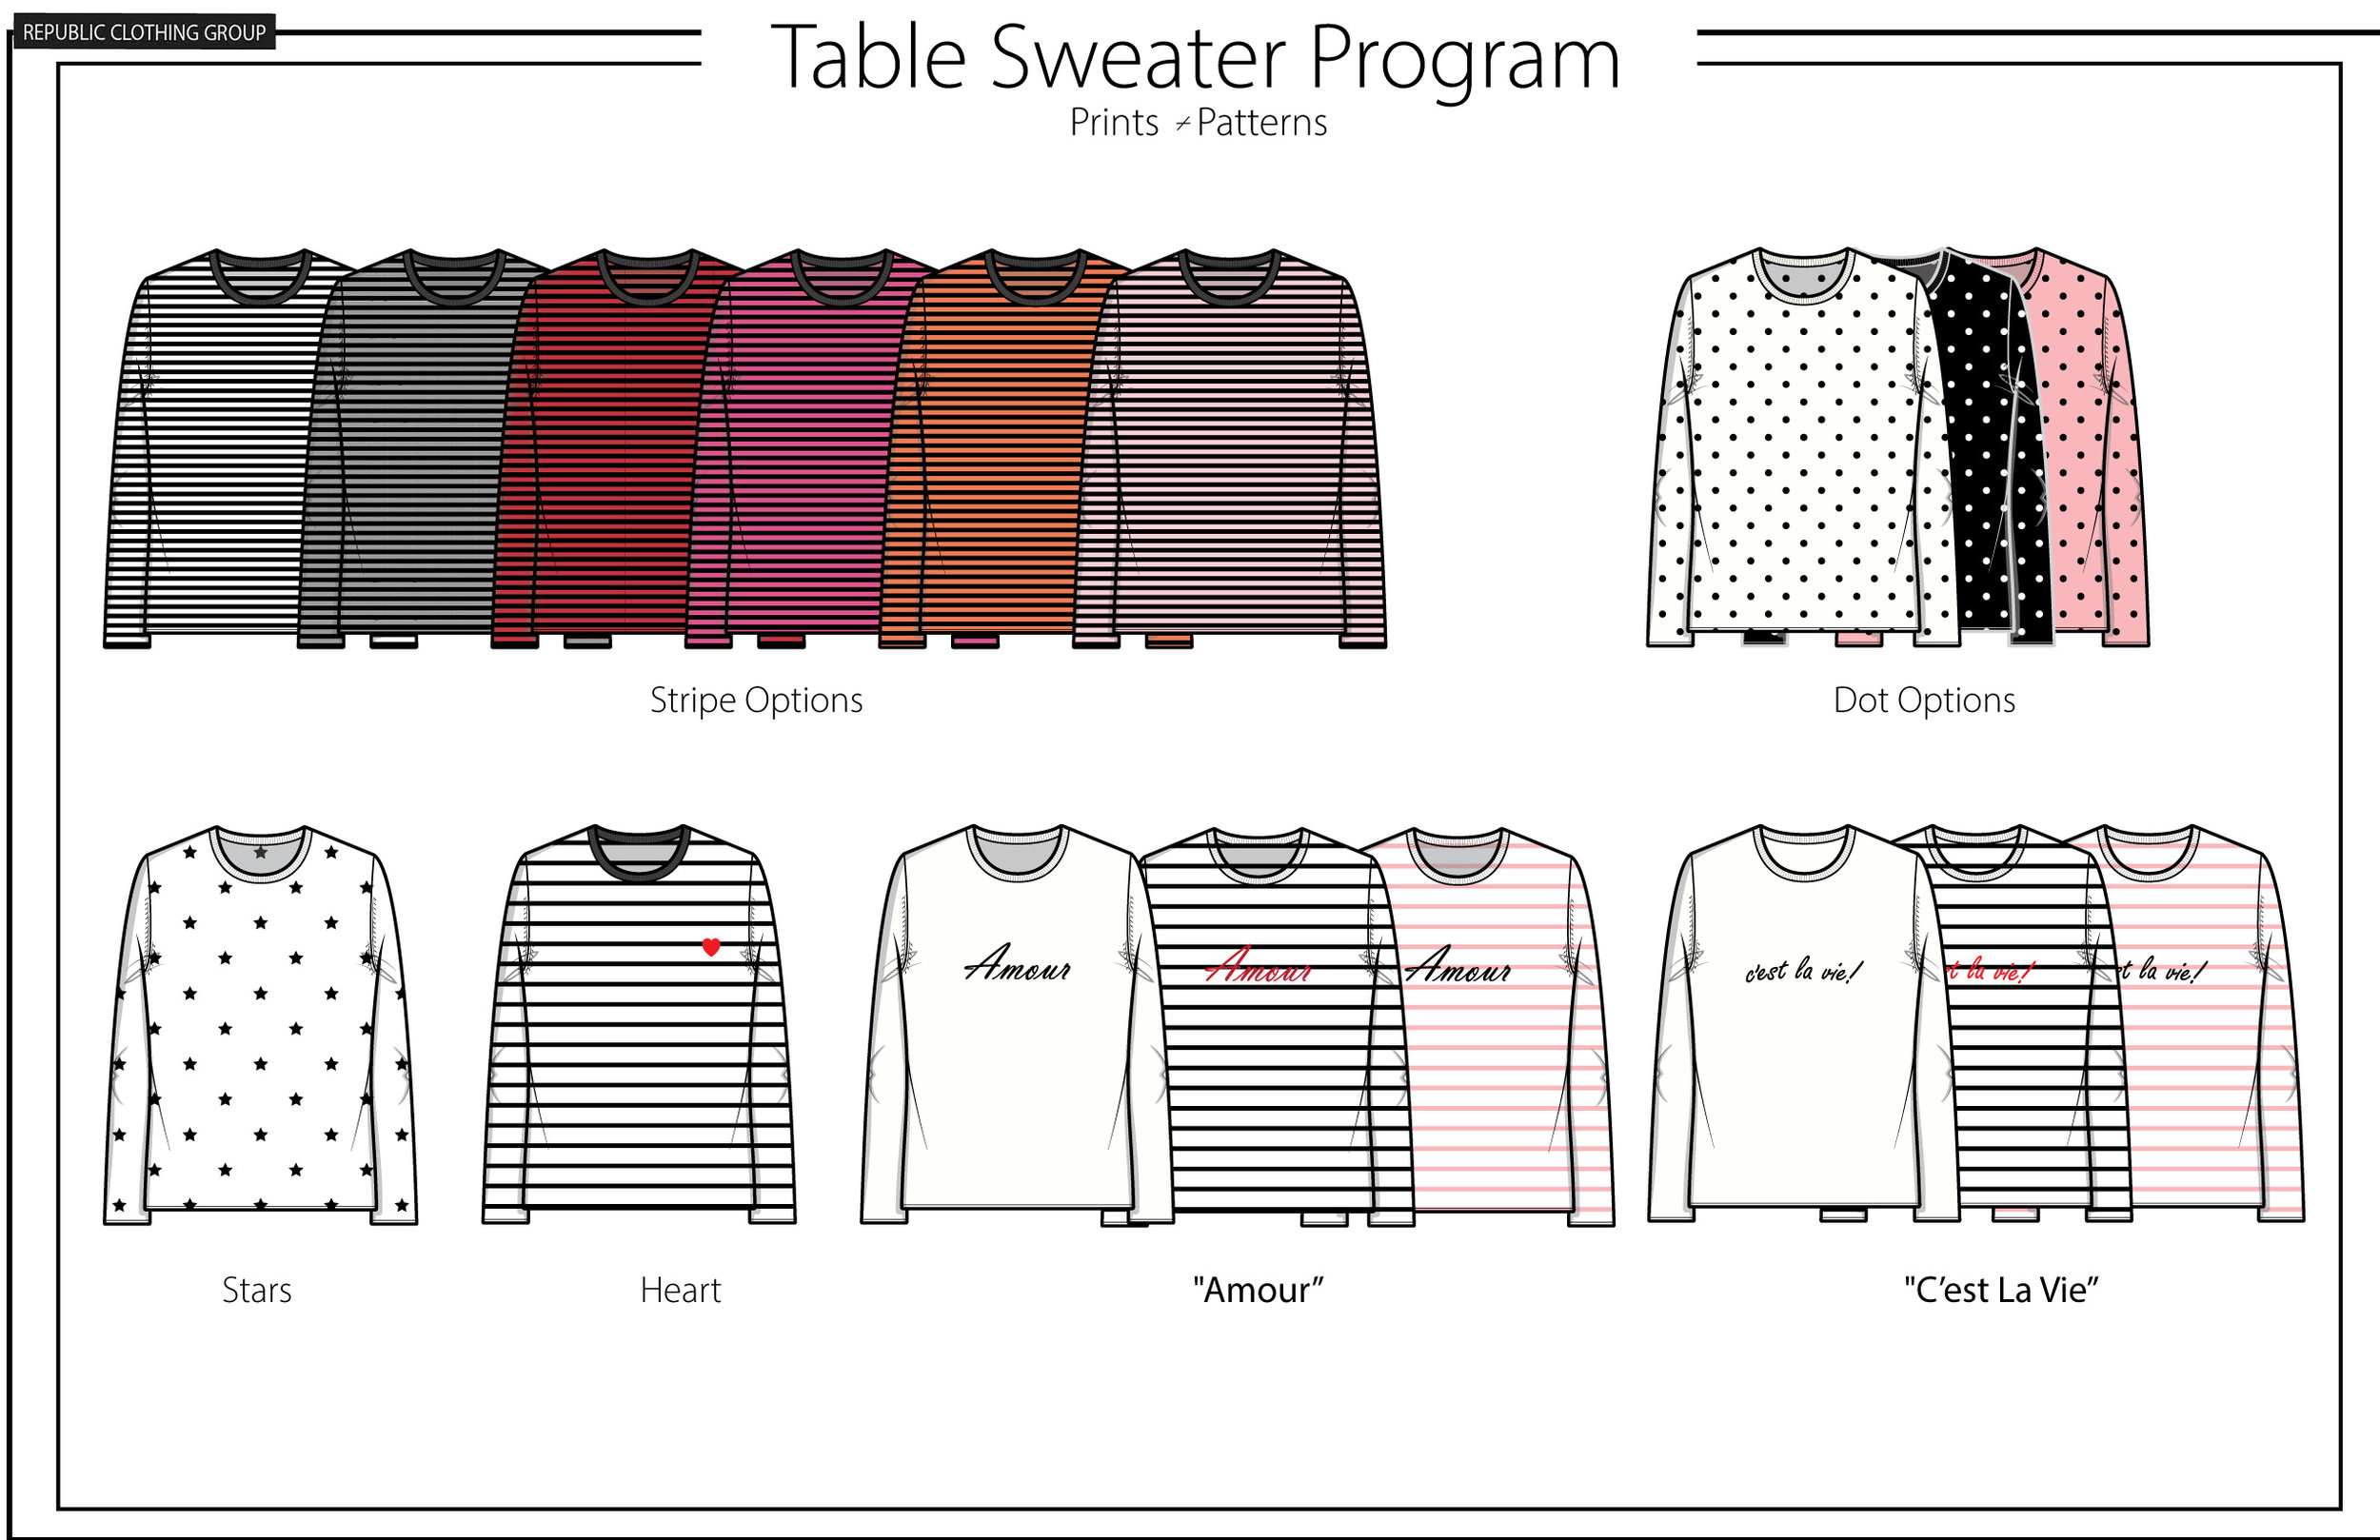 Table Sweater Program Print Pattern.jpg